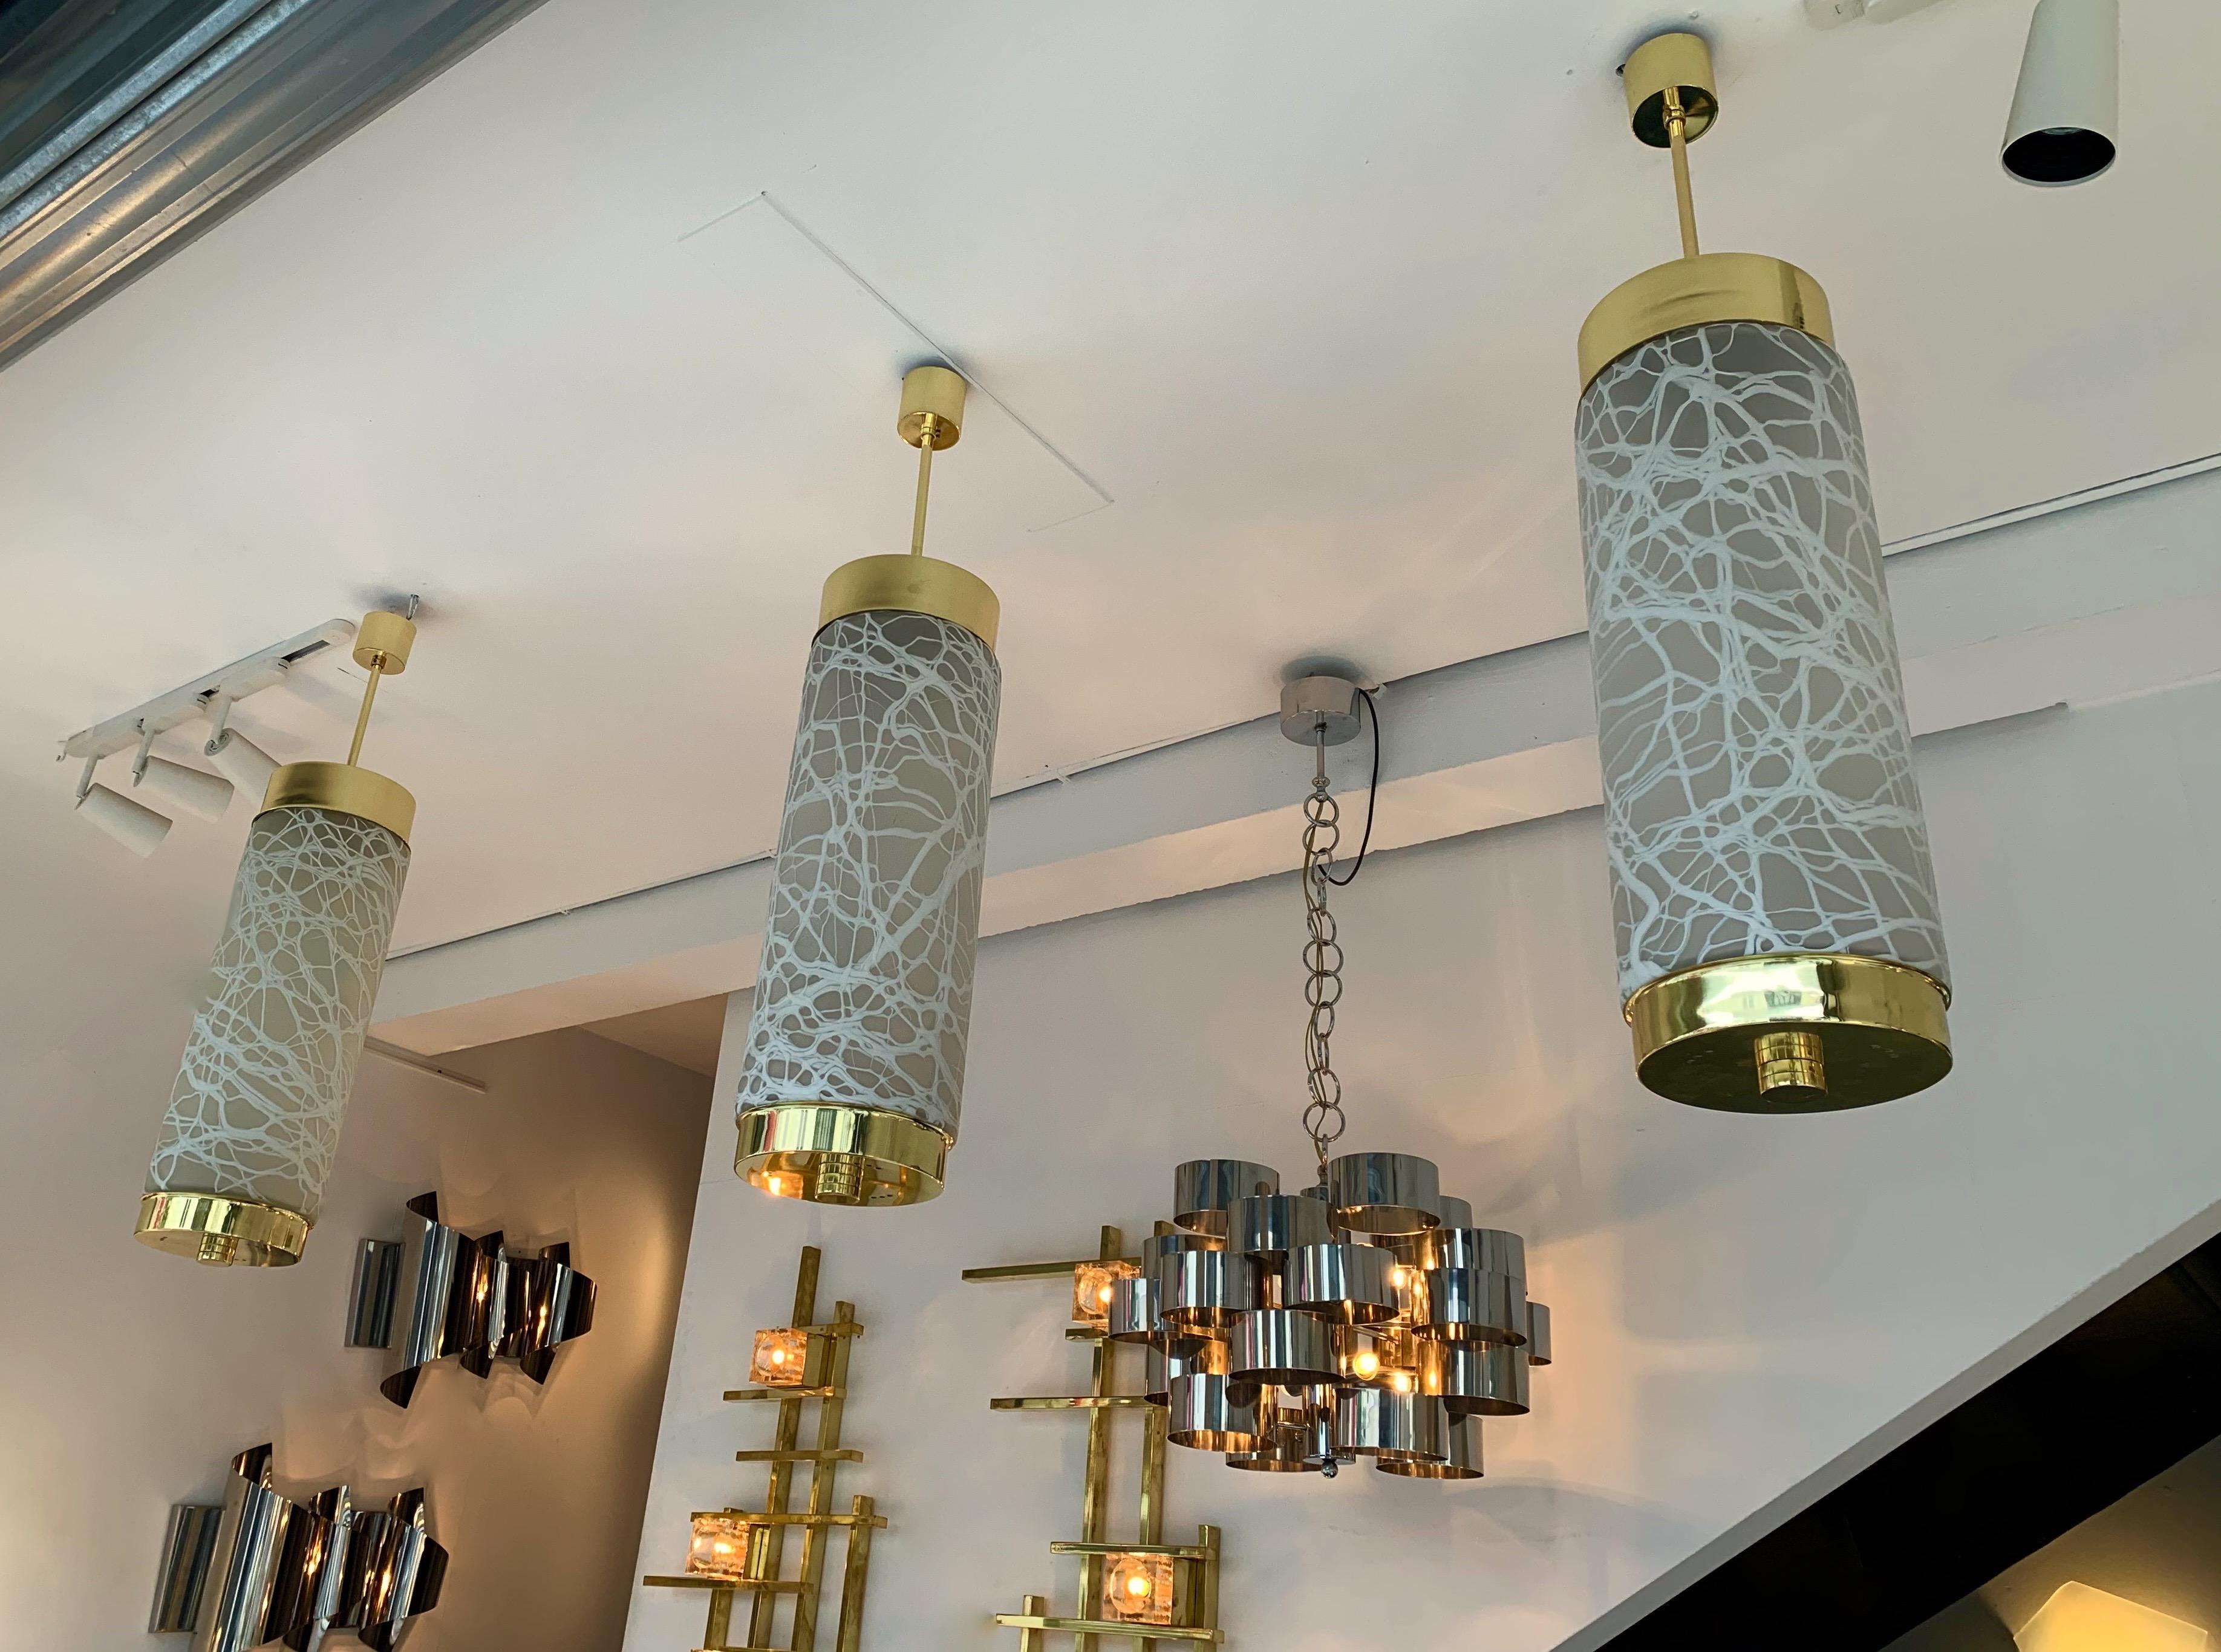 Limited edition of 4 large ceiling pendants lights lanterns or chandelier, model 